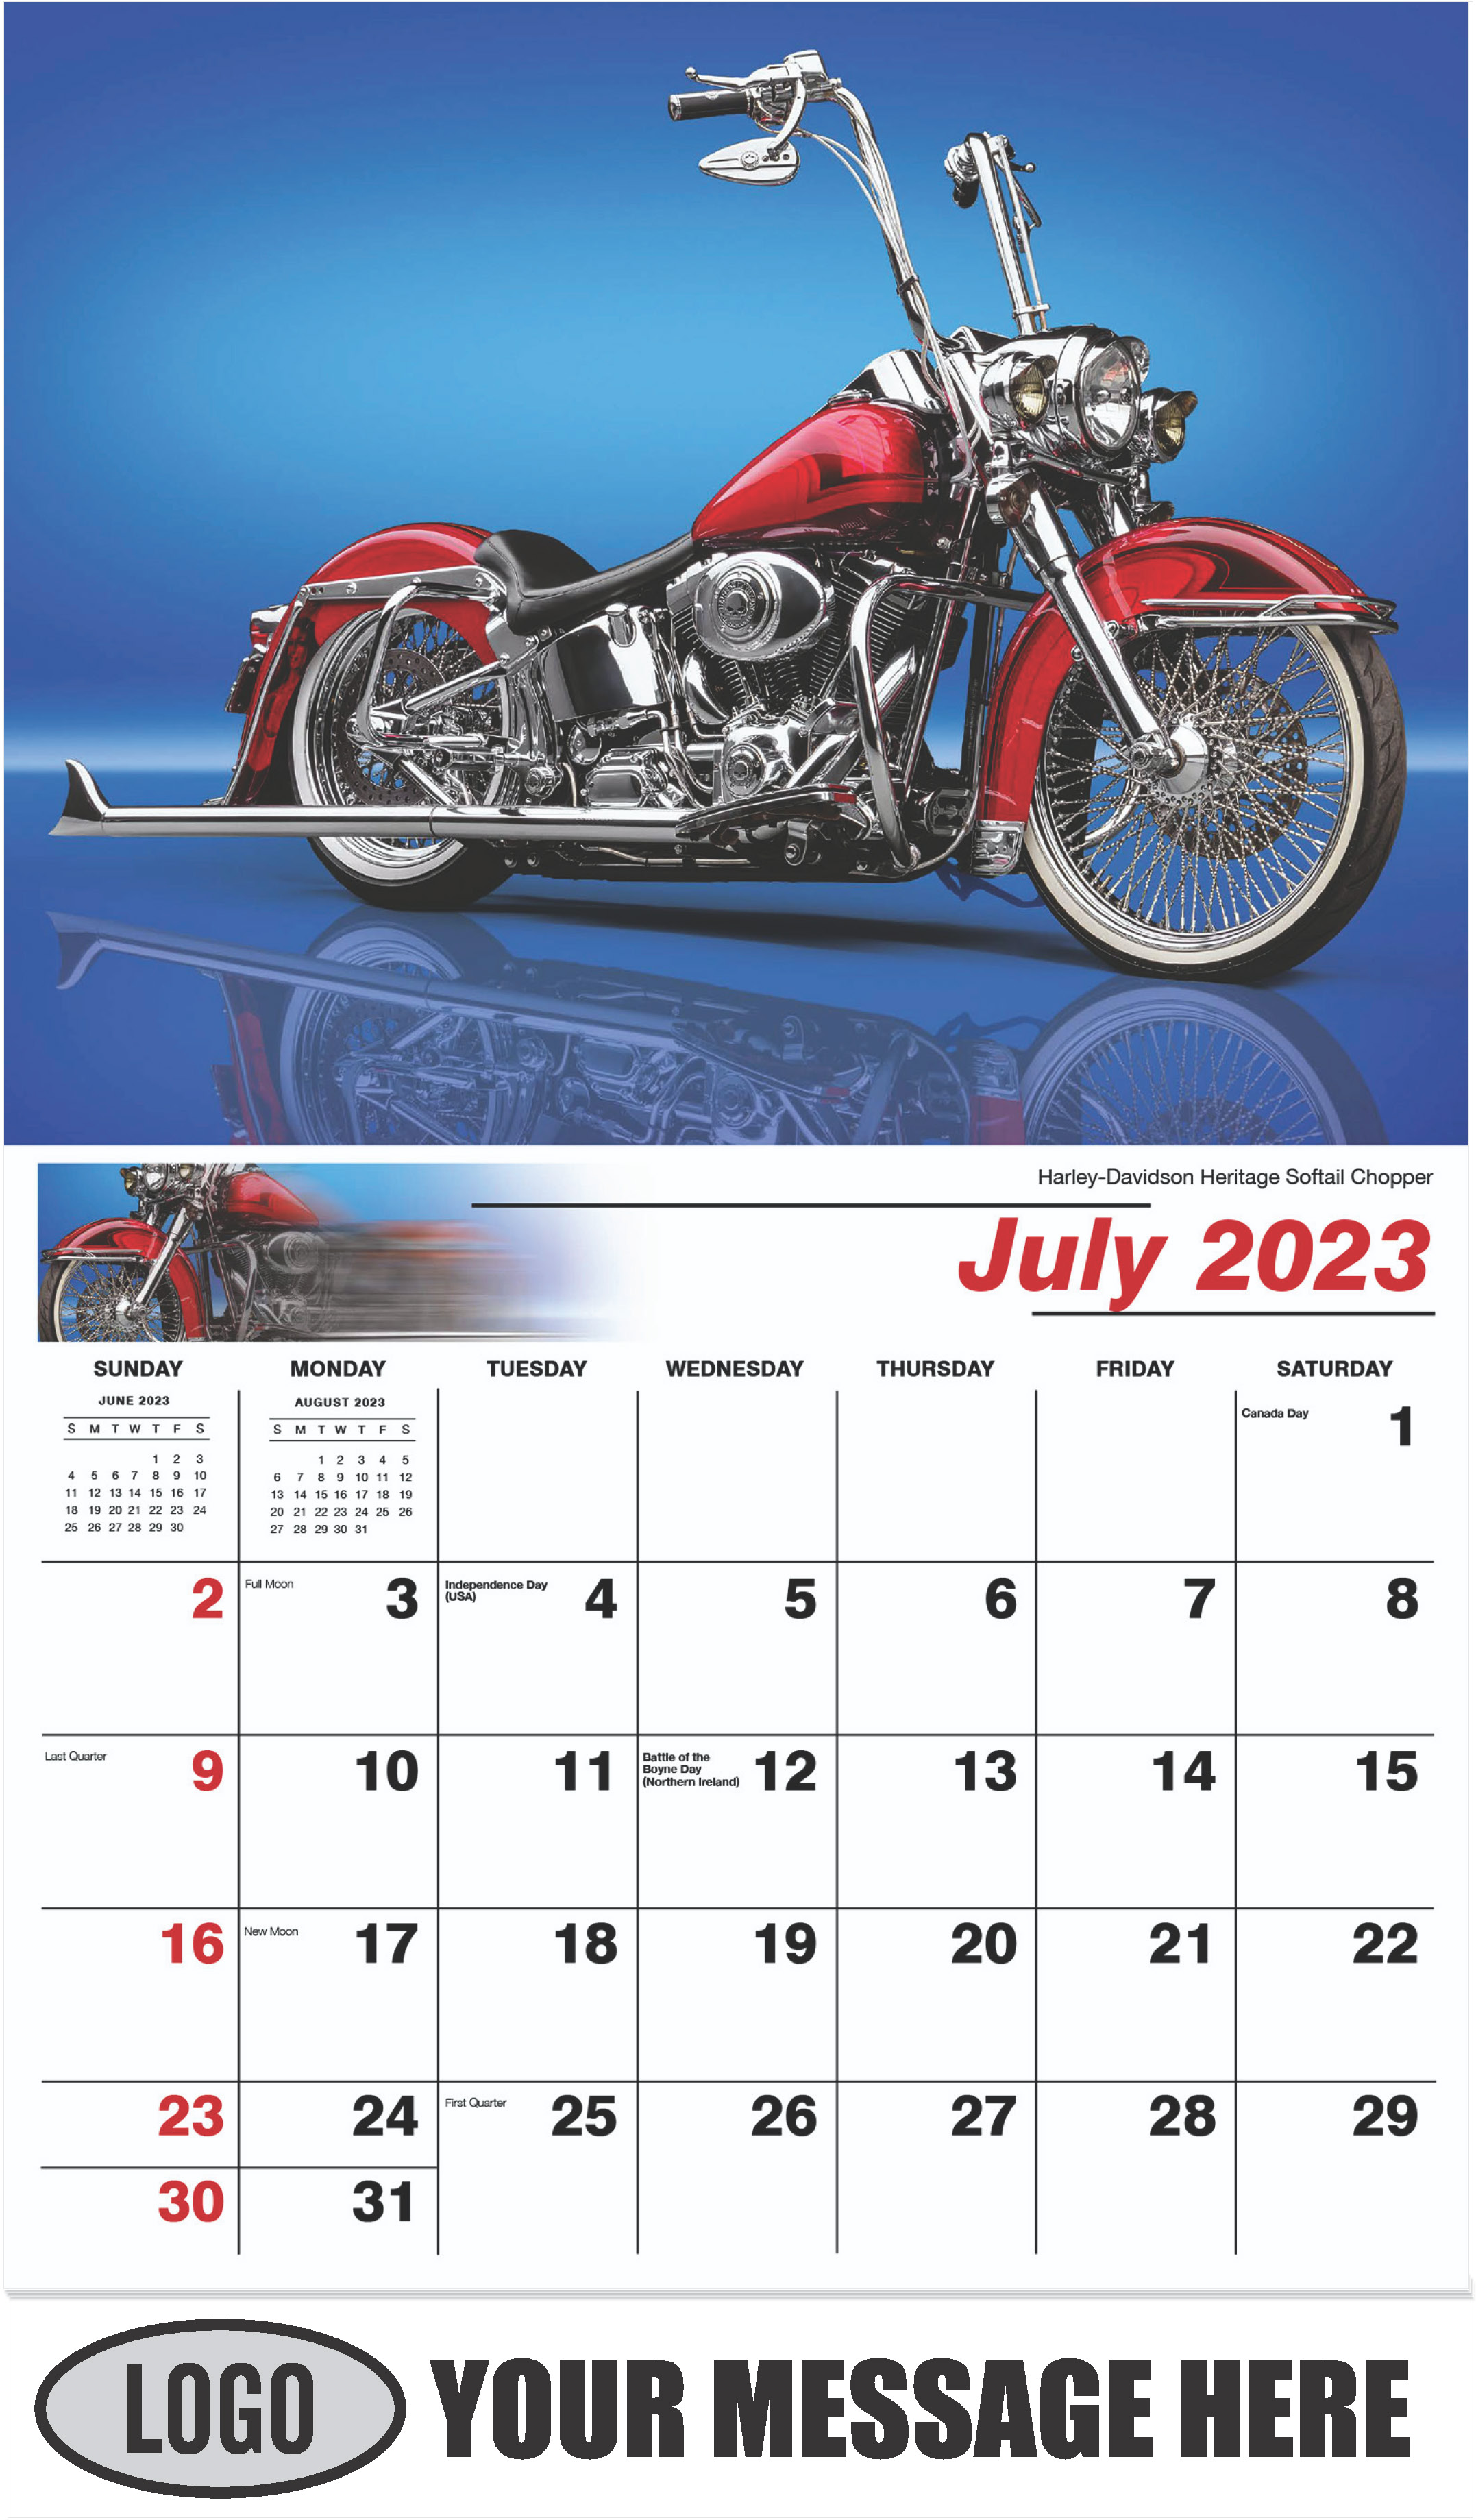 Harley-Davidson Heritage Softail Chopper - July - Motorcycle Mania 2023 Promotional Calendar